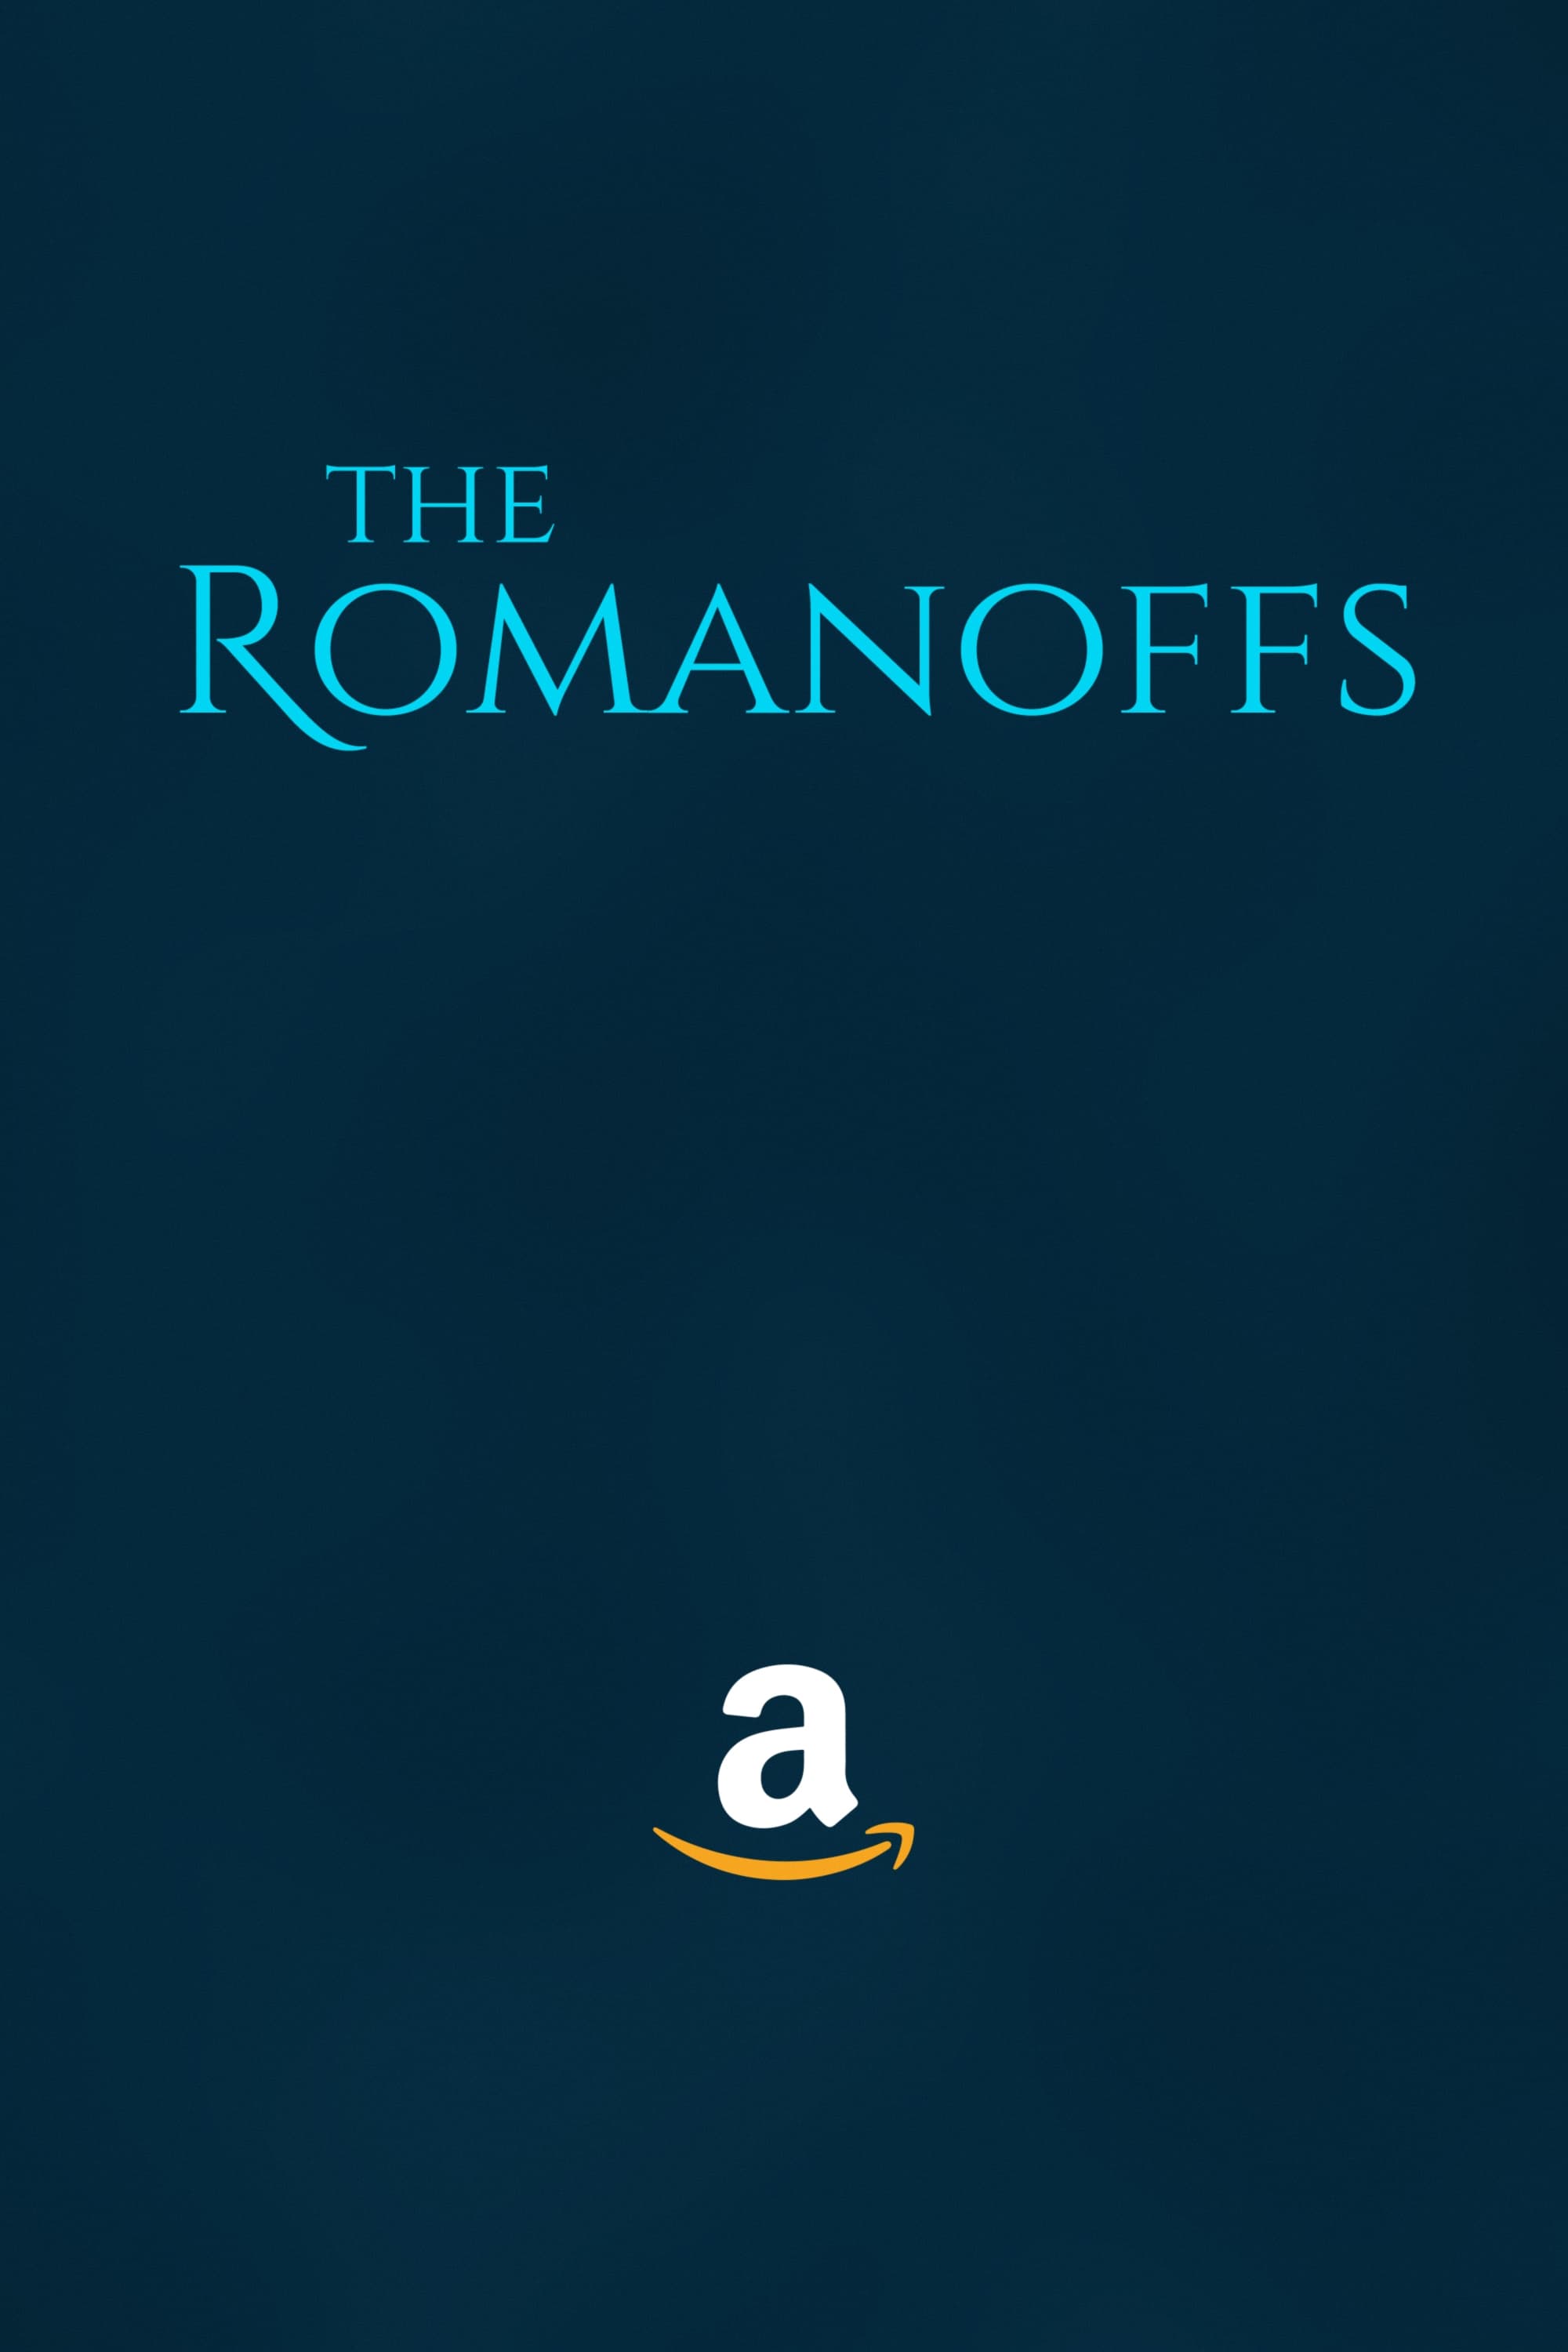 The Romanoffs Poster